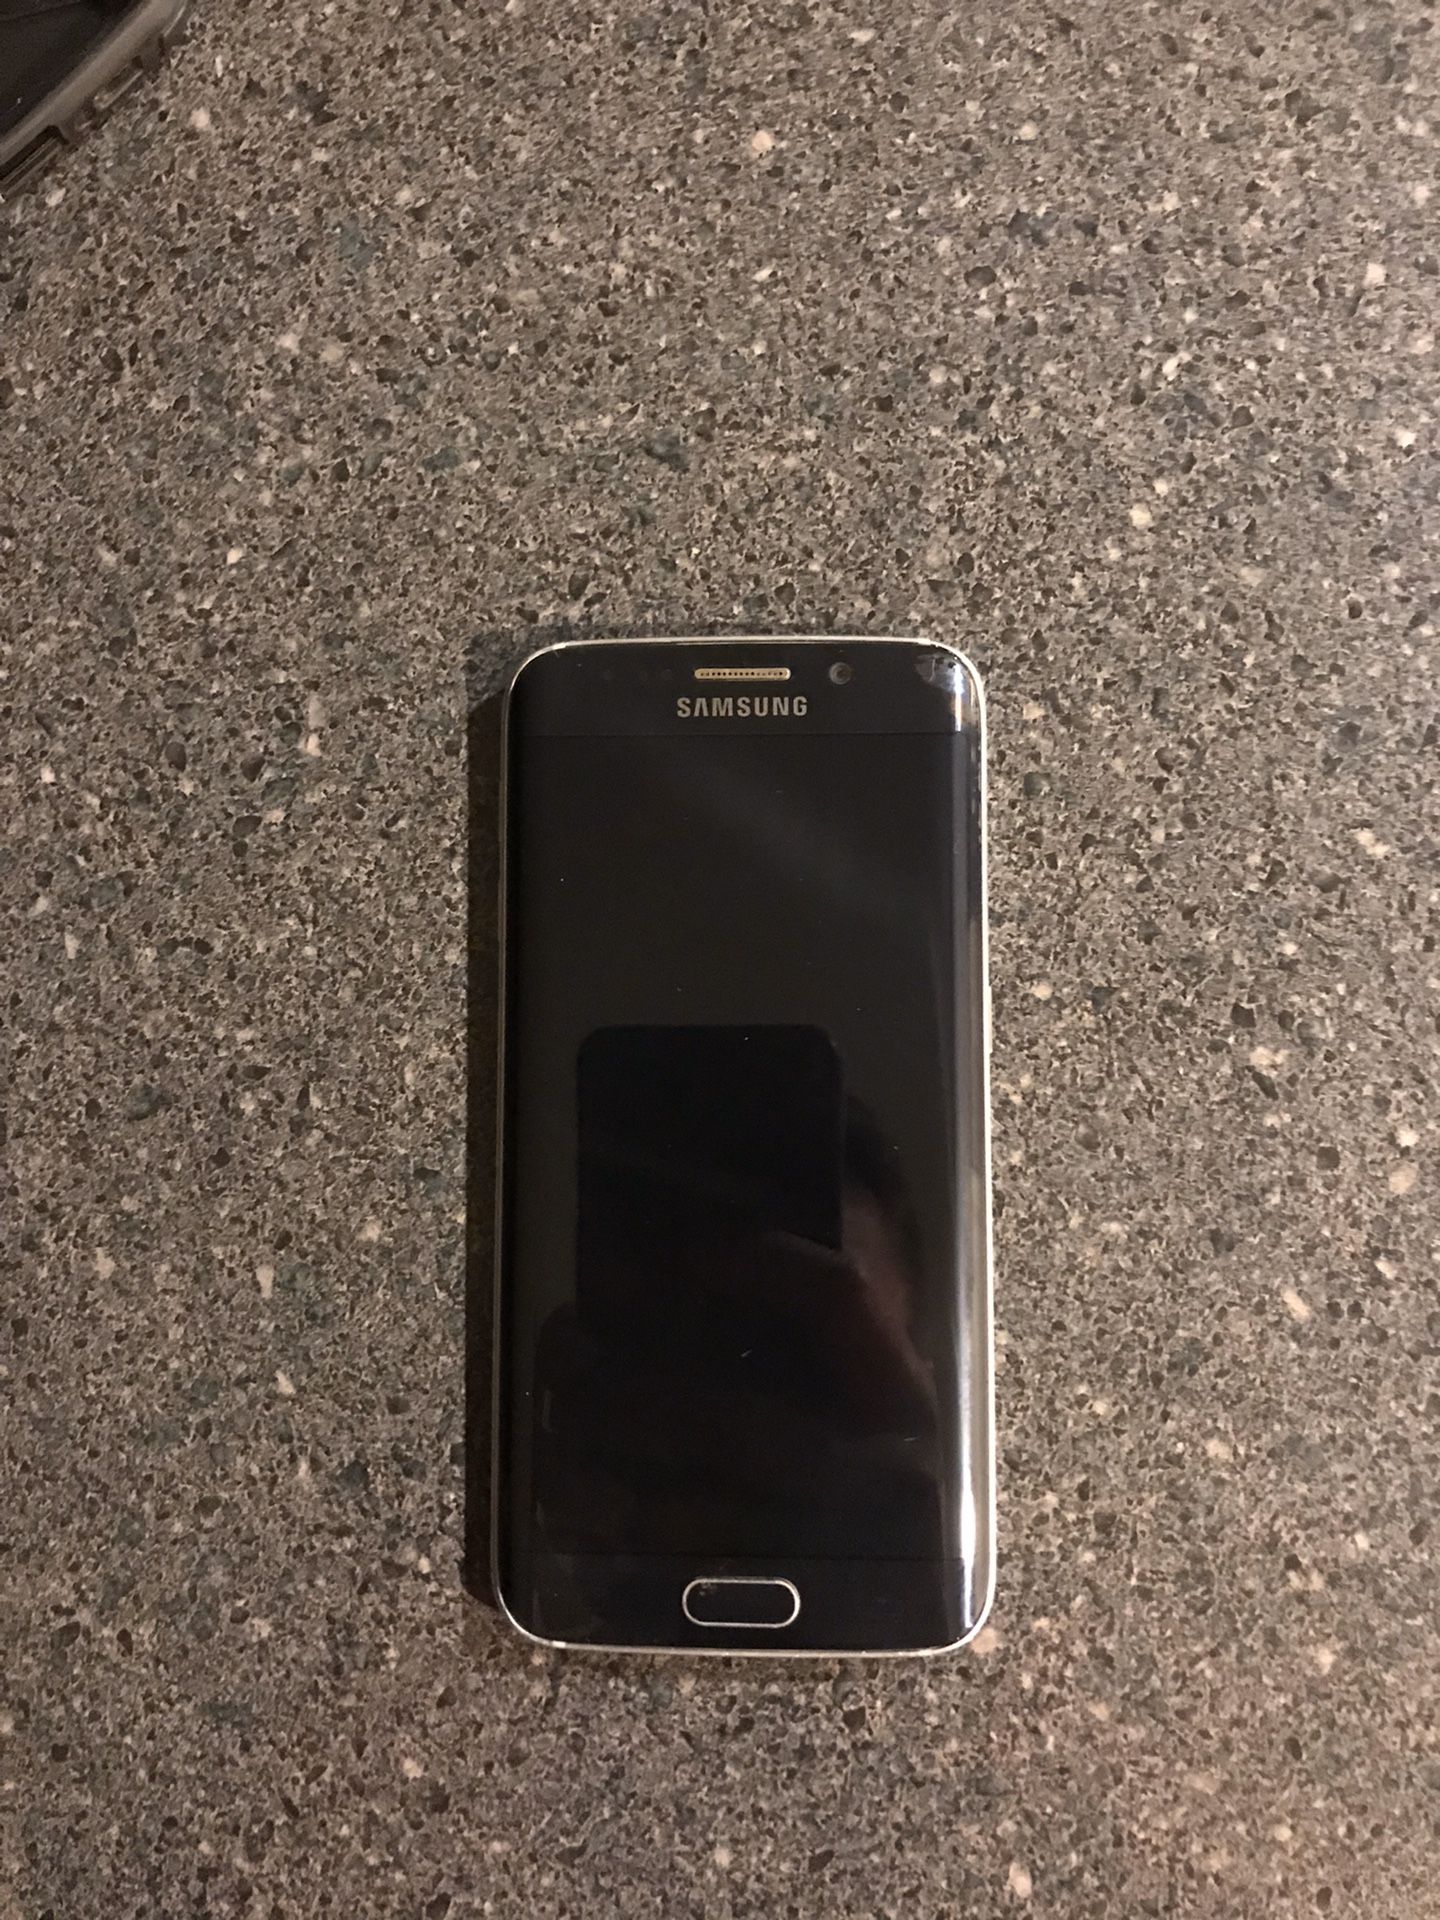 Samsung galaxy edge S6